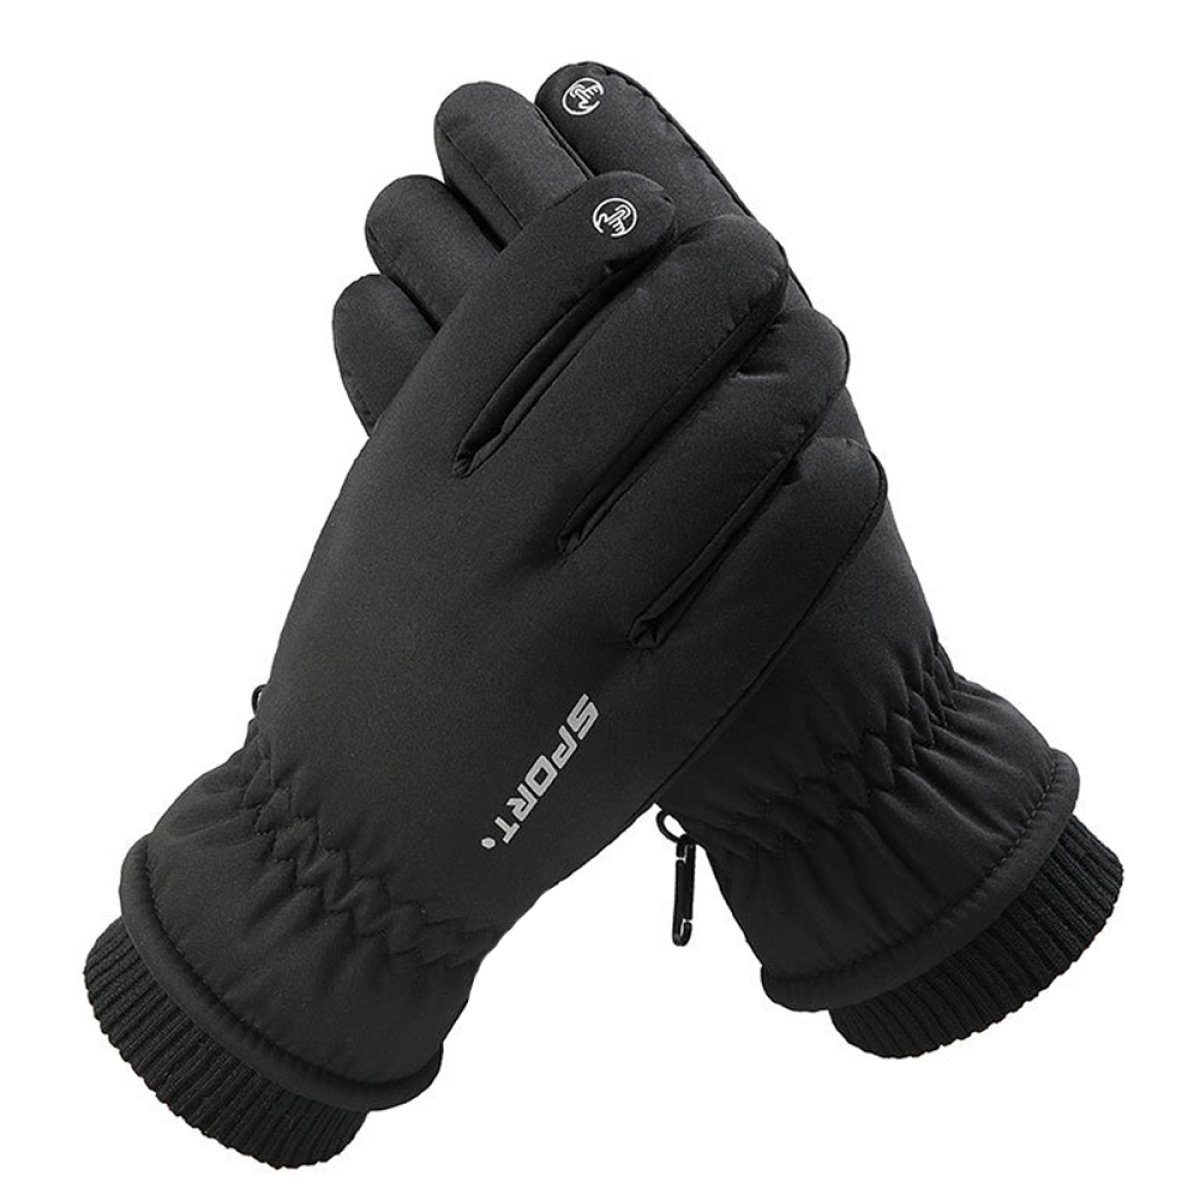 Warme Touchscreen Damen Winterhandschuhe ZmdecQna Handschuhe schwarz Skihandschuhe Wasserdicht Herren